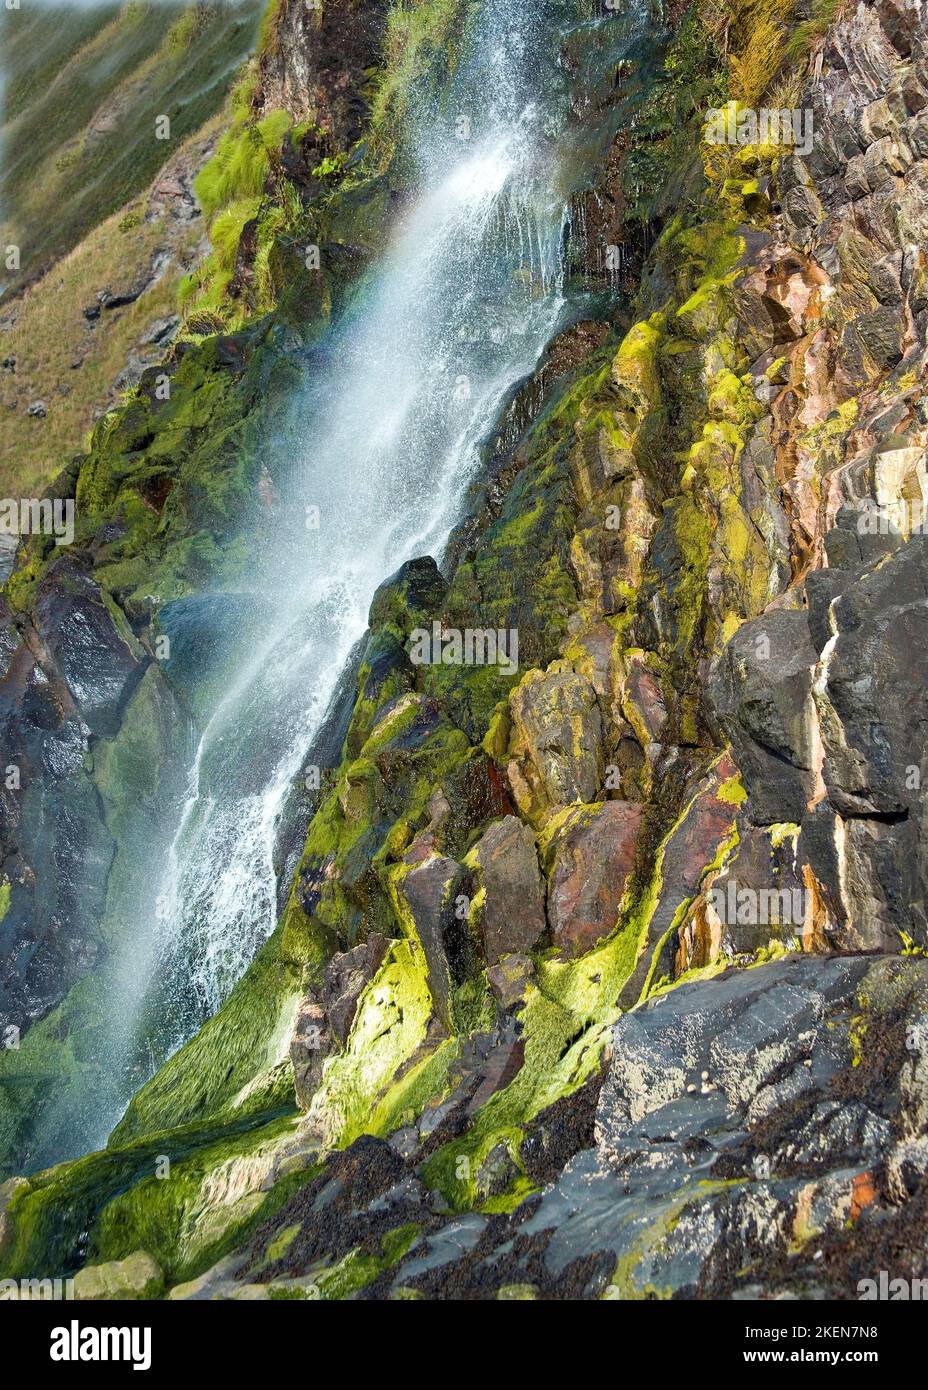 The river Saith waterfall tumbling down cliff face onto Tresaith Beach in Cardigan Bay Wales Stock Photo